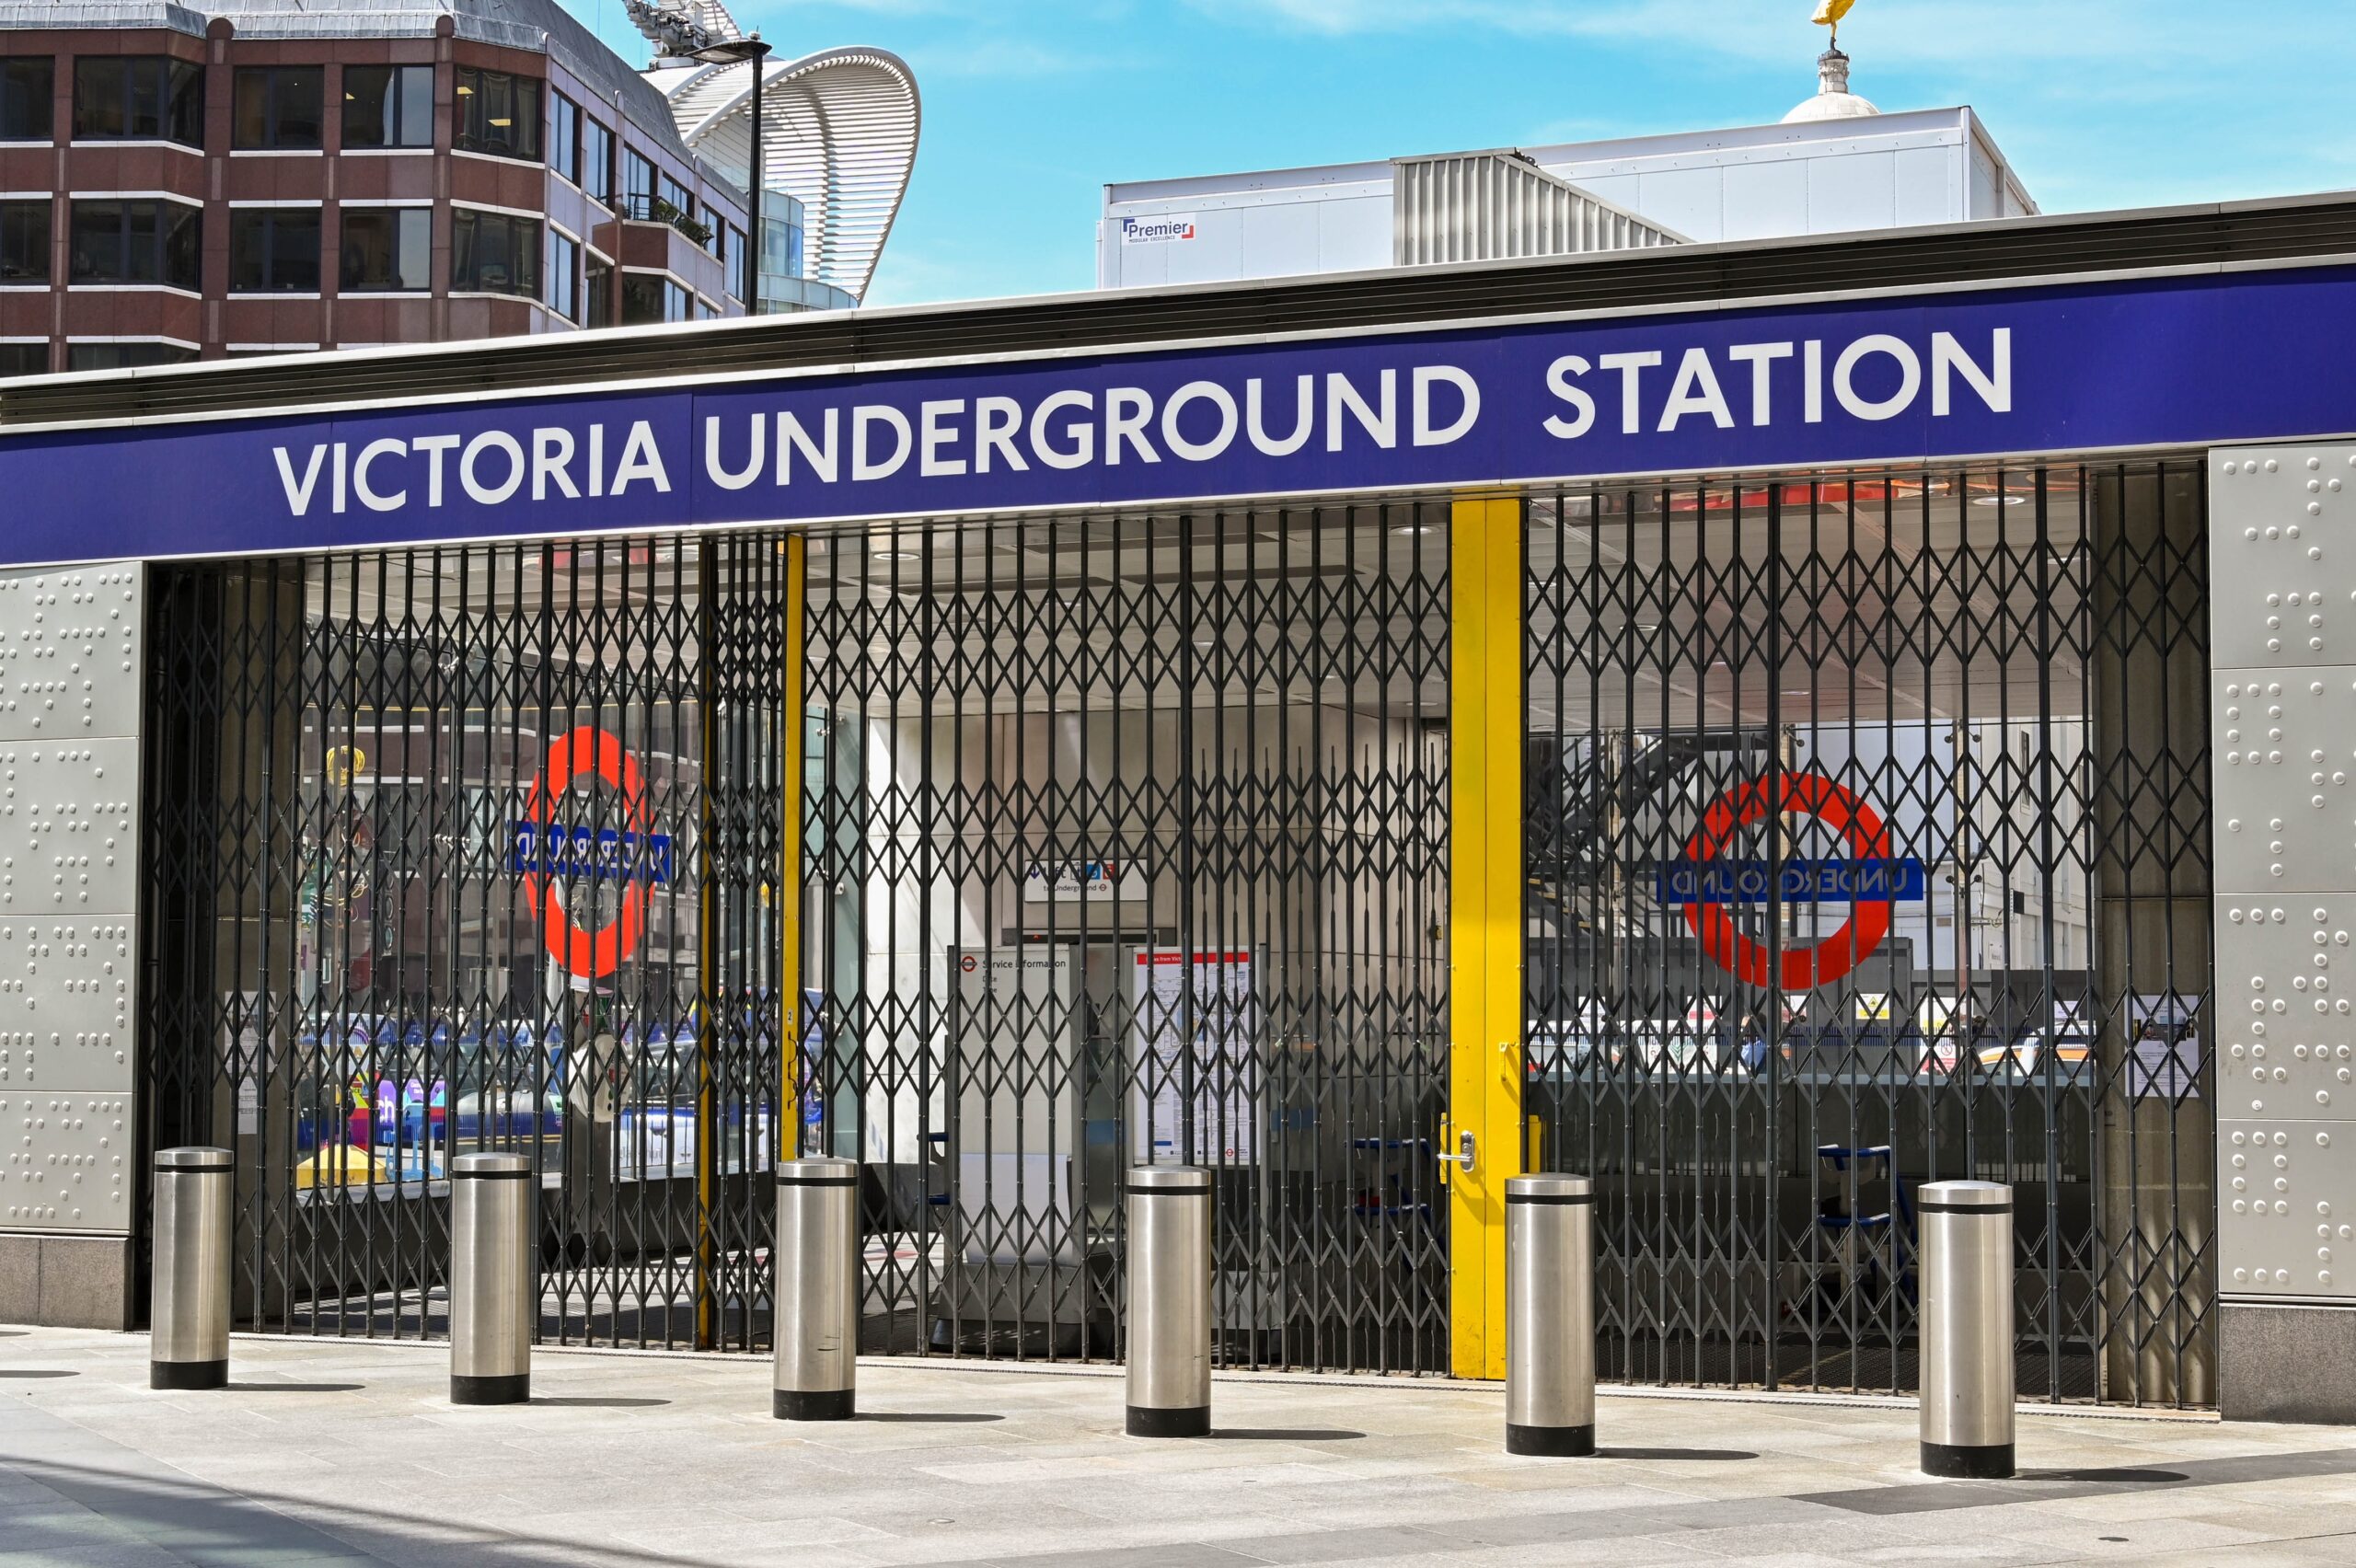 Victoria Underground station closed due to strikes